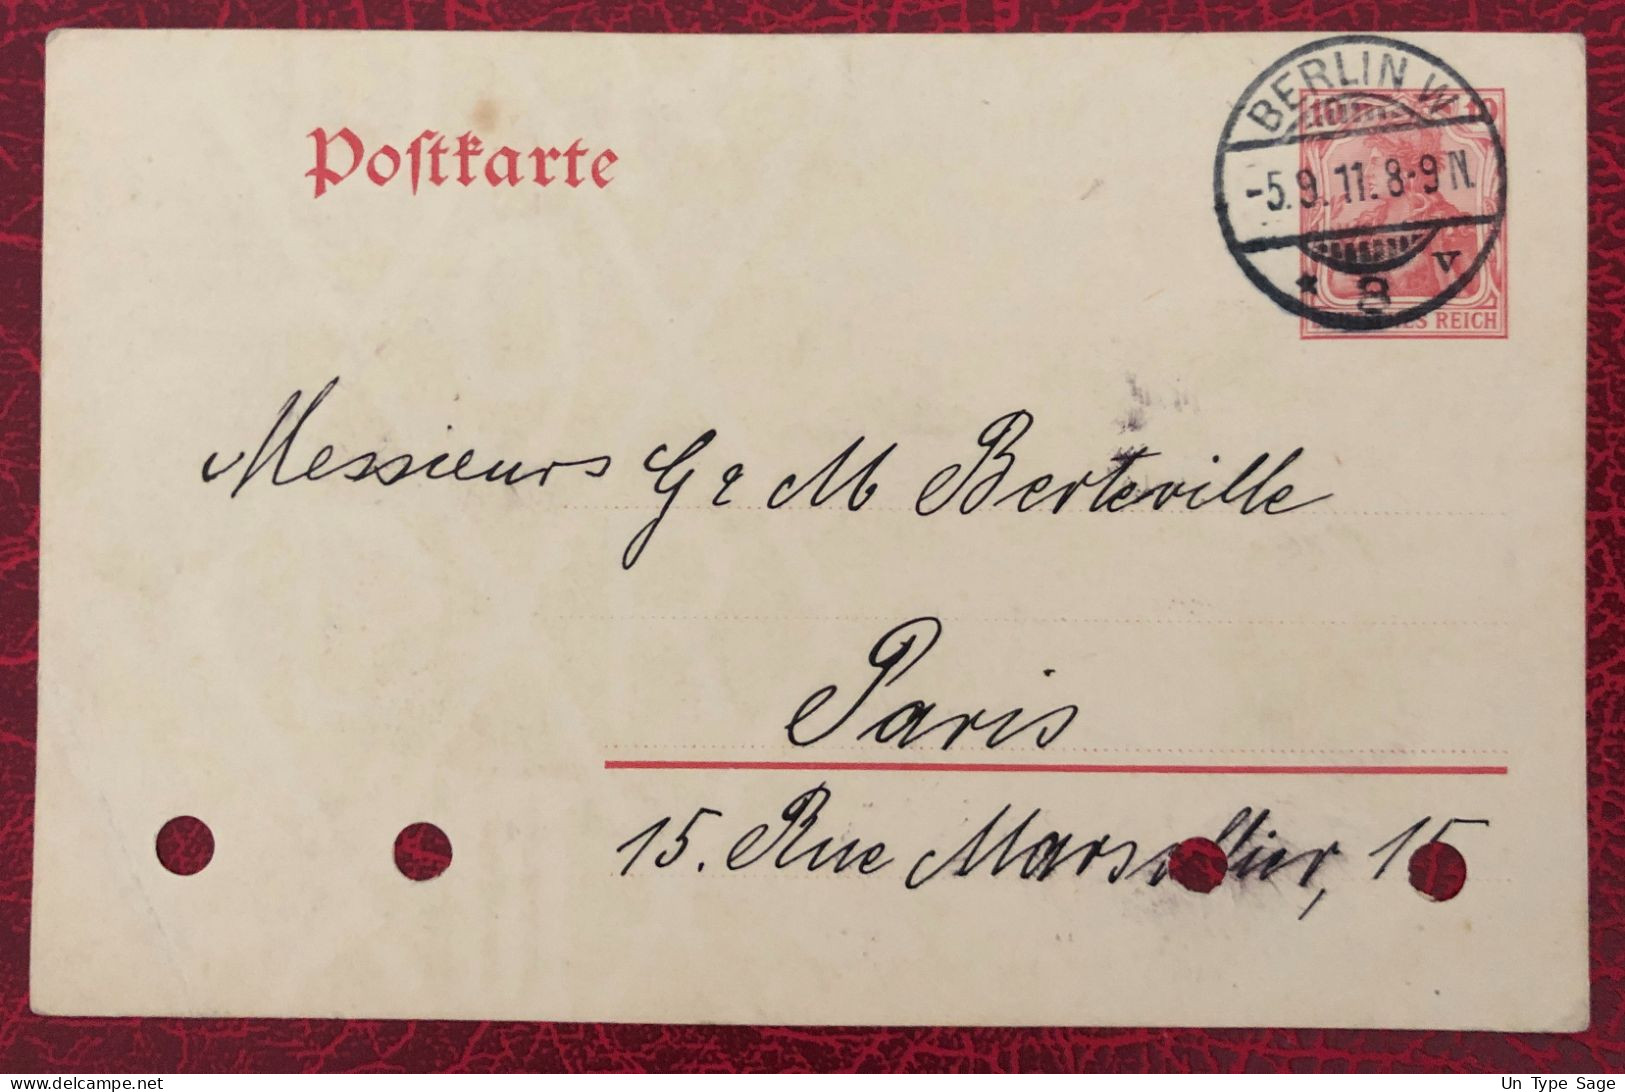 Allemagne, Entier-Carte, Cachet Berlin W 5.9.1911 - (C243) - Postkarten